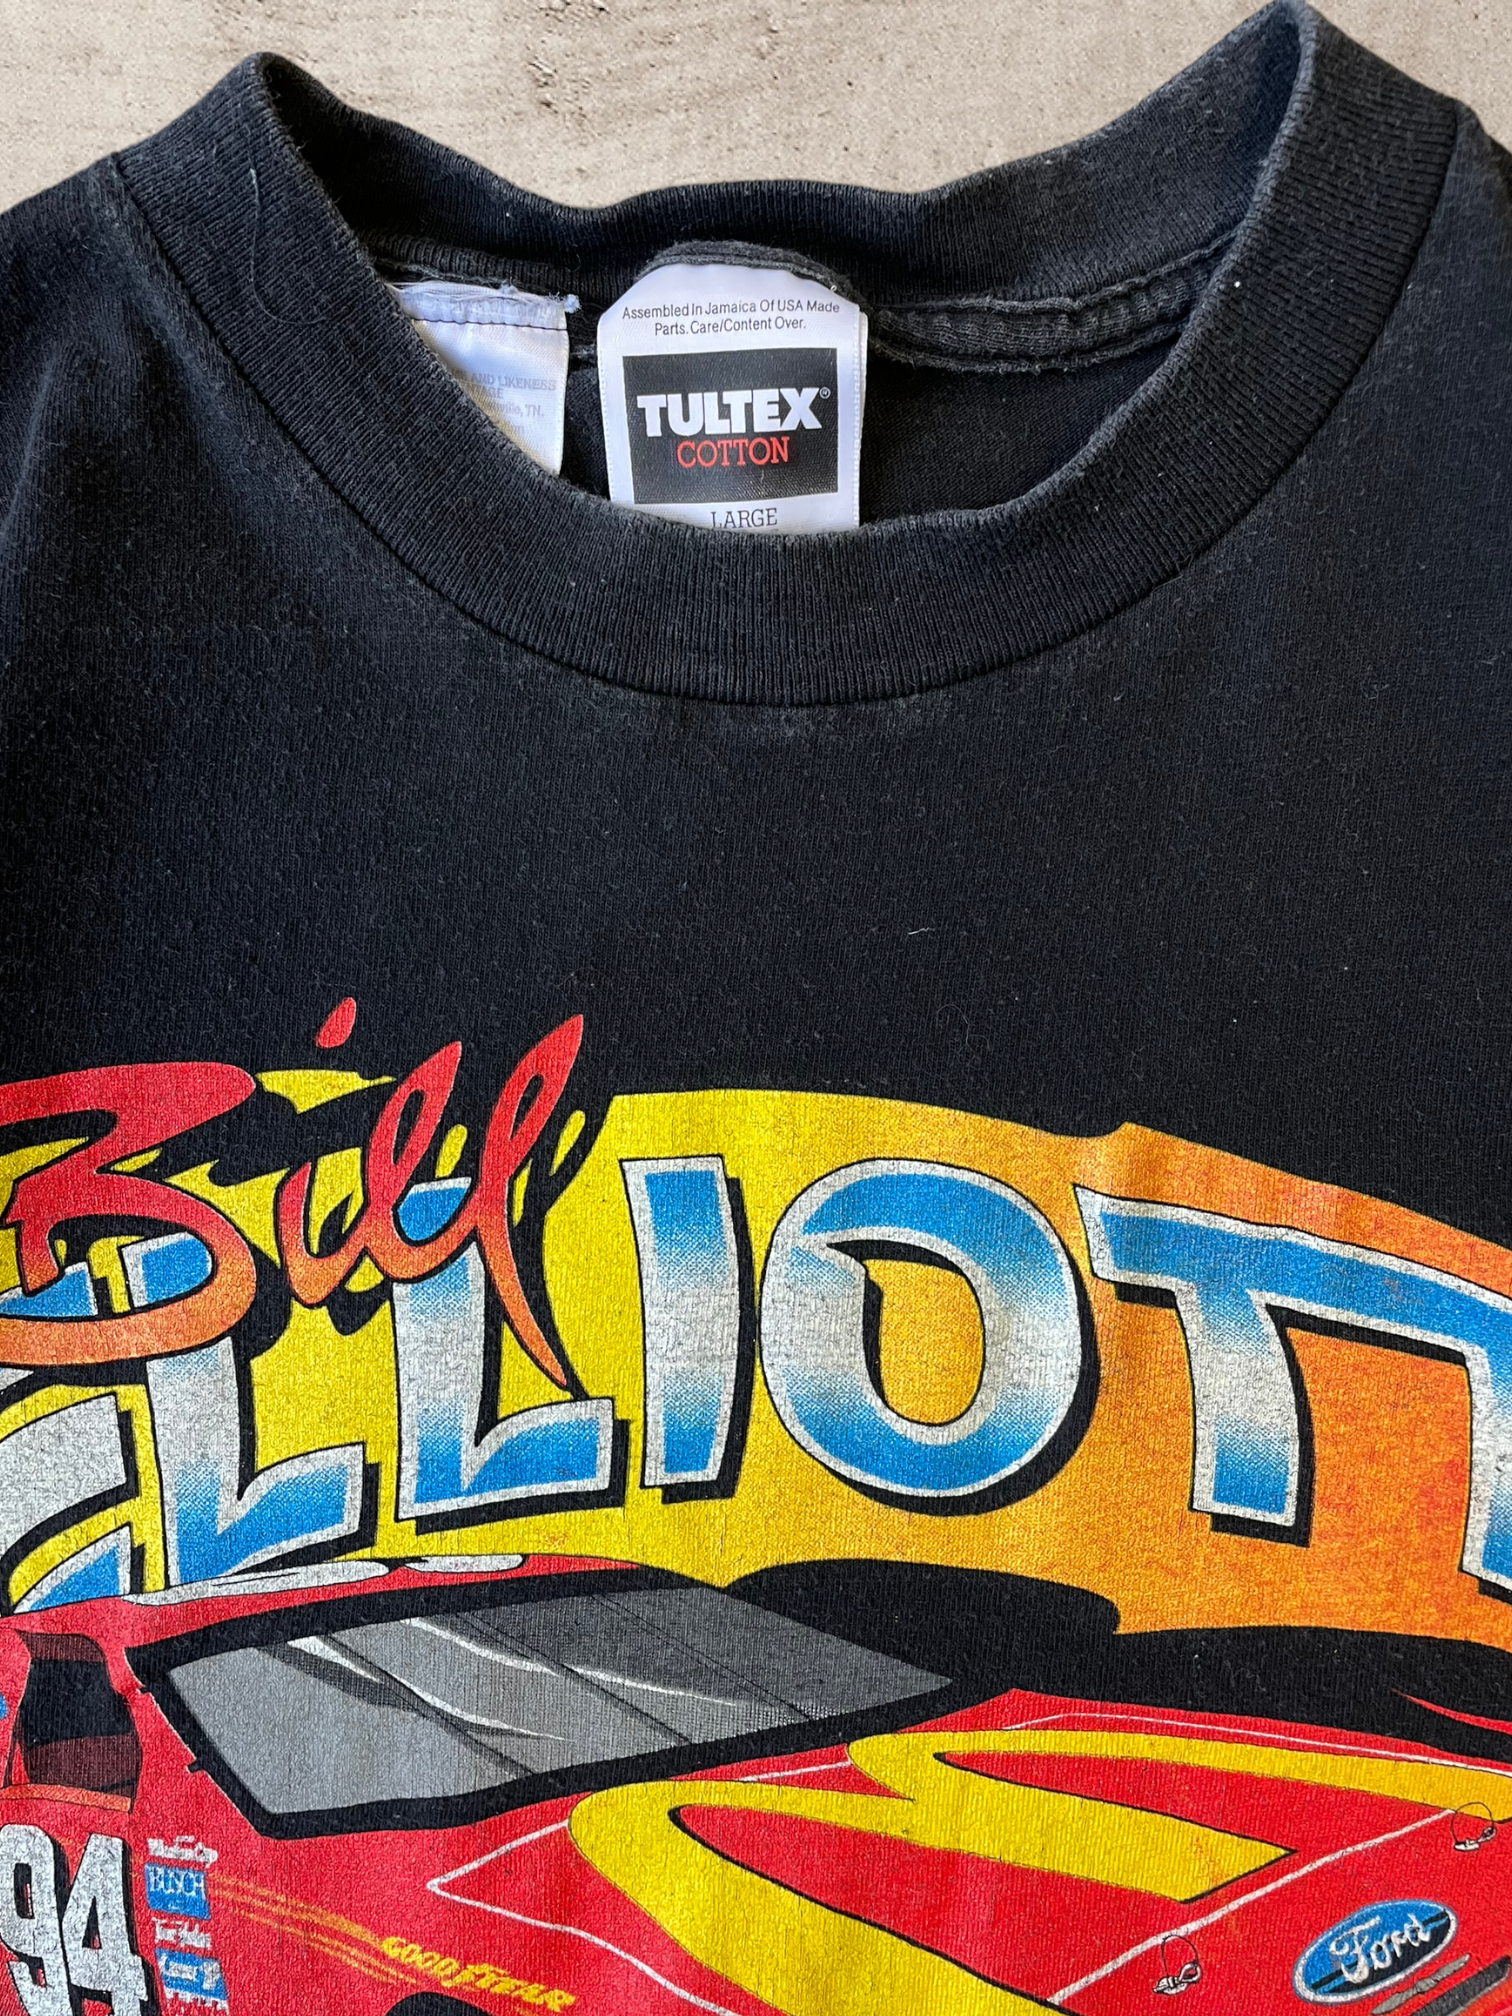 1995 Bill Elliott McDonalds Racing T-Shirt - Large